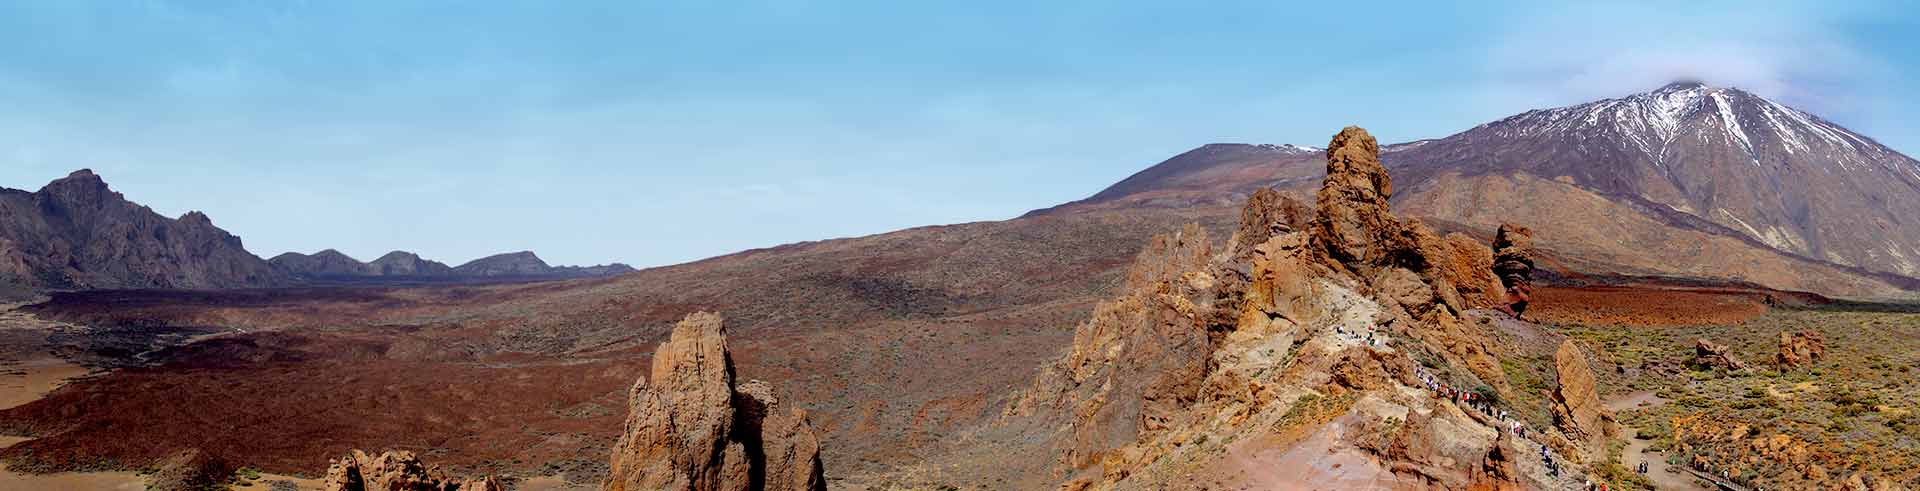 Location de Voitures Tenerife Sud